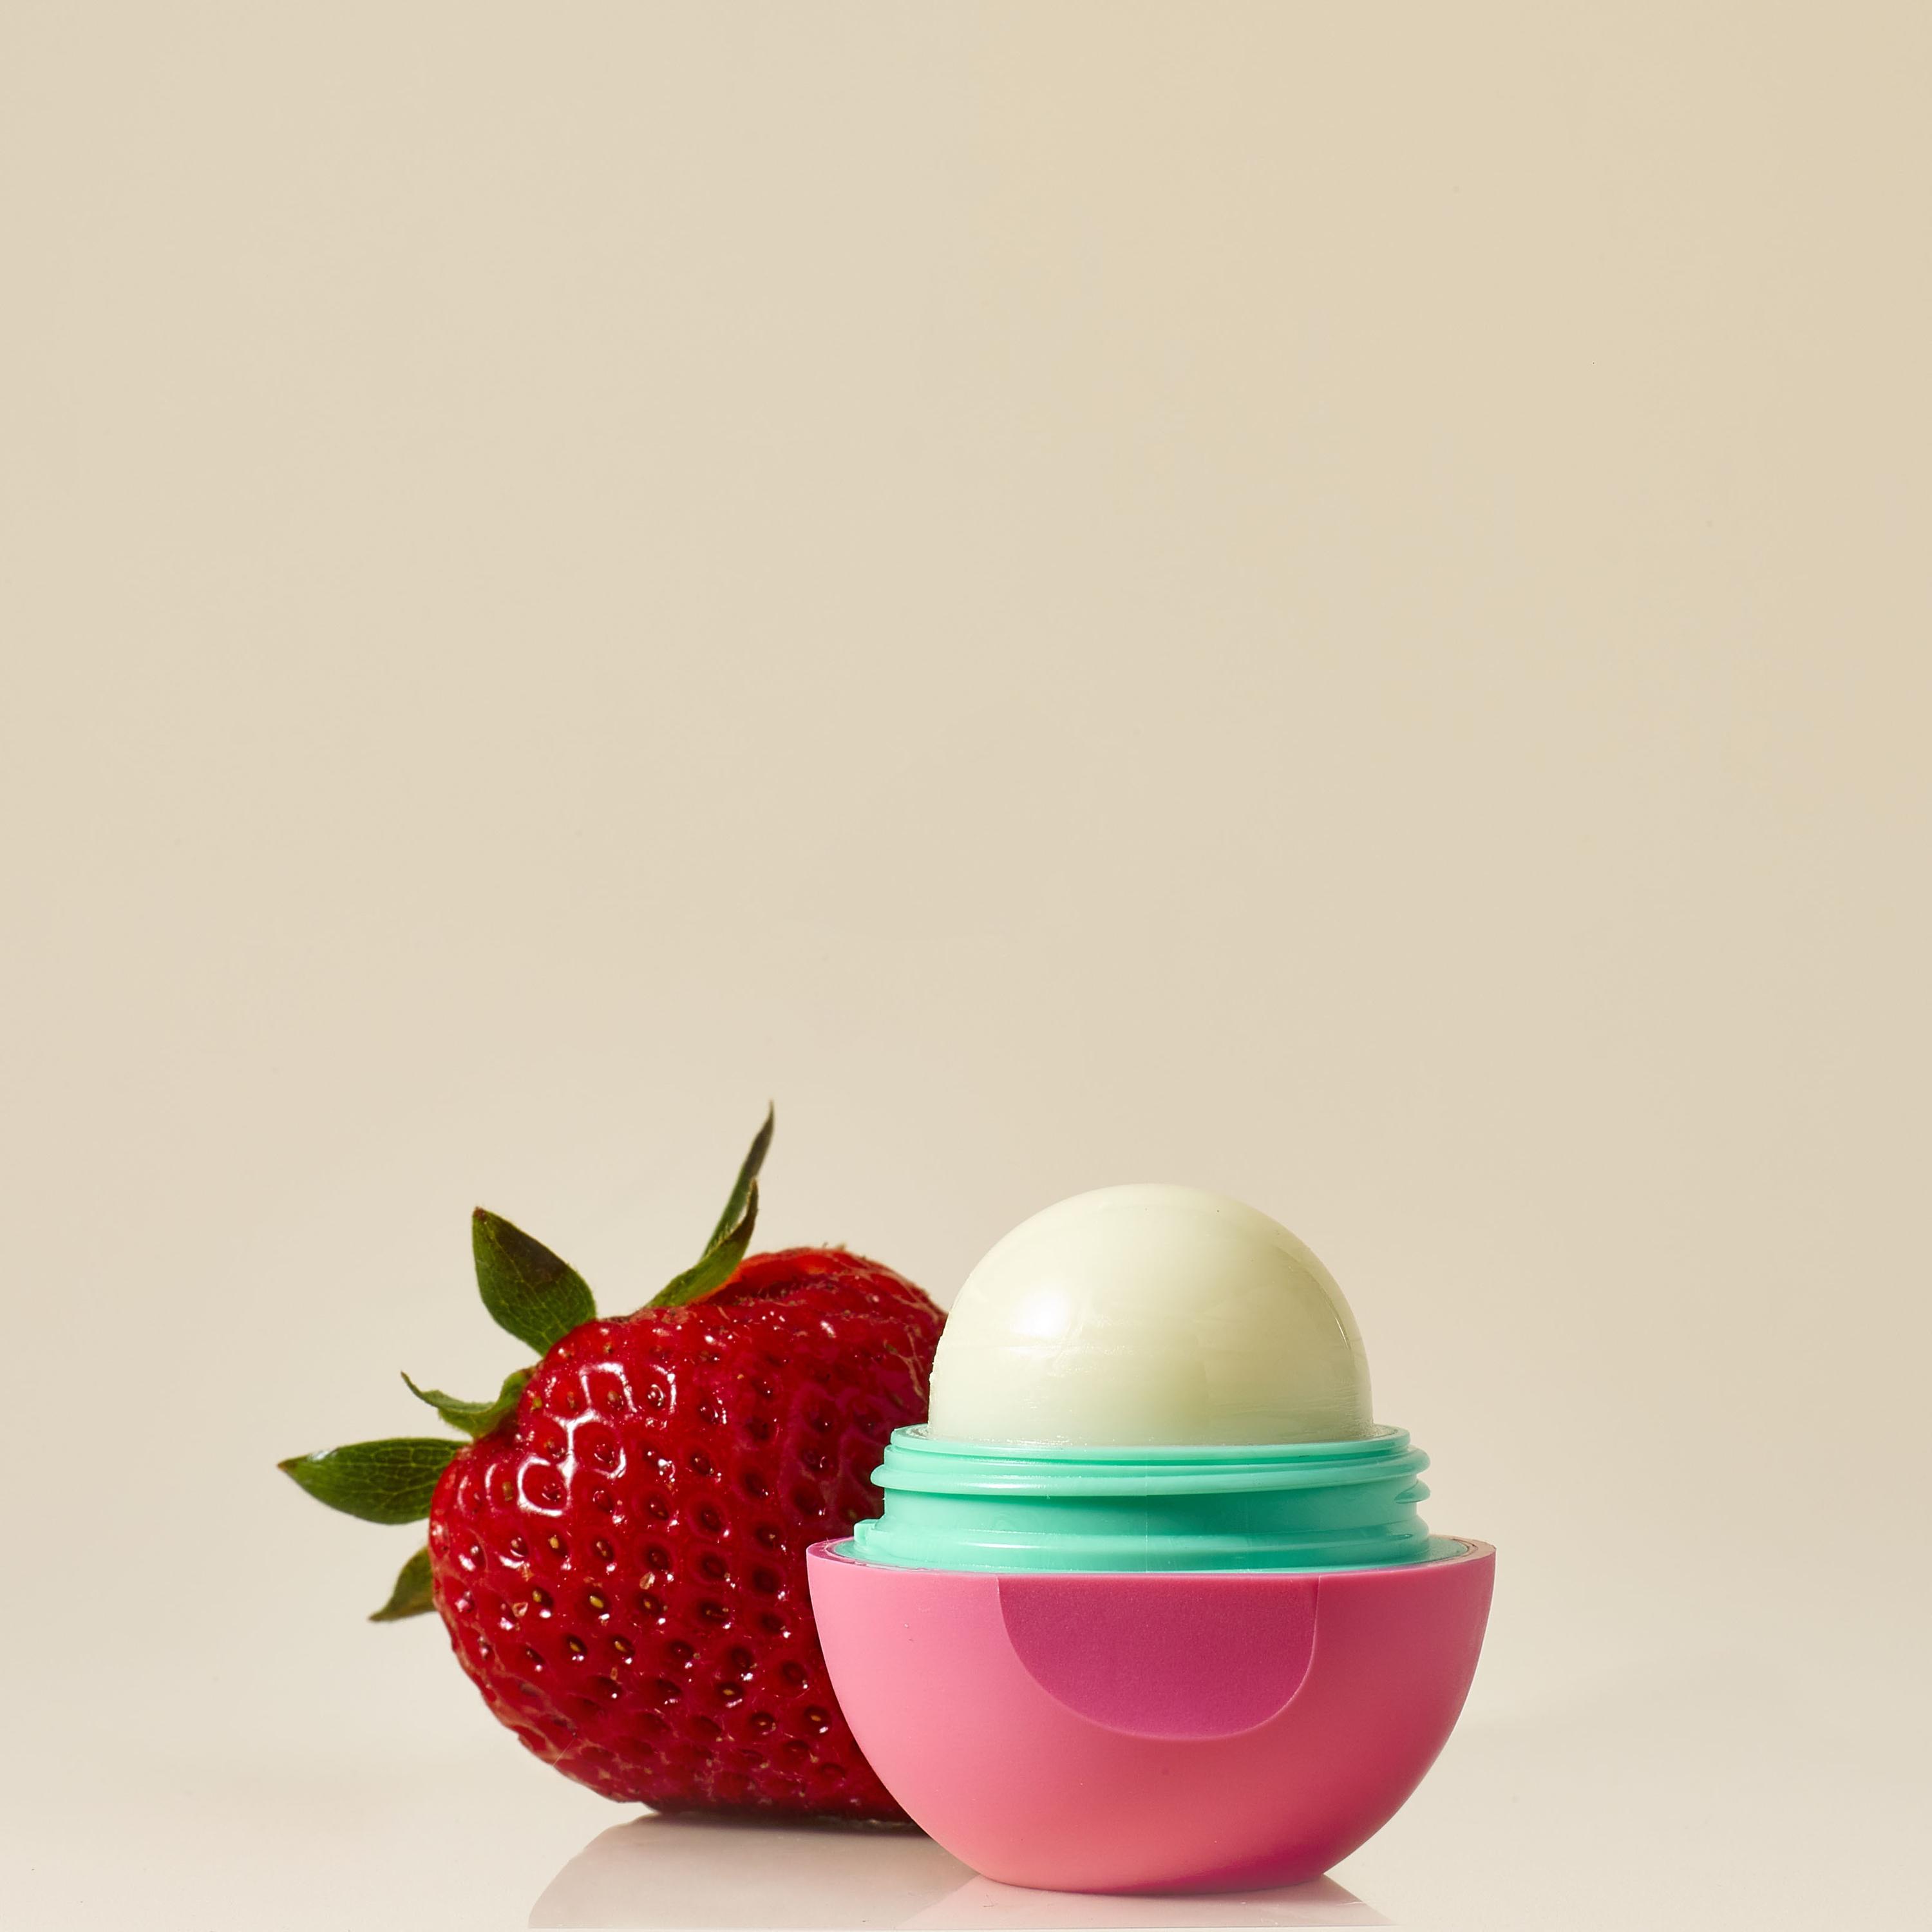 eos 100% Natural & Organic Lip Balm Sphere - Strawberry Sorbet | 0.25 oz - image 3 of 8